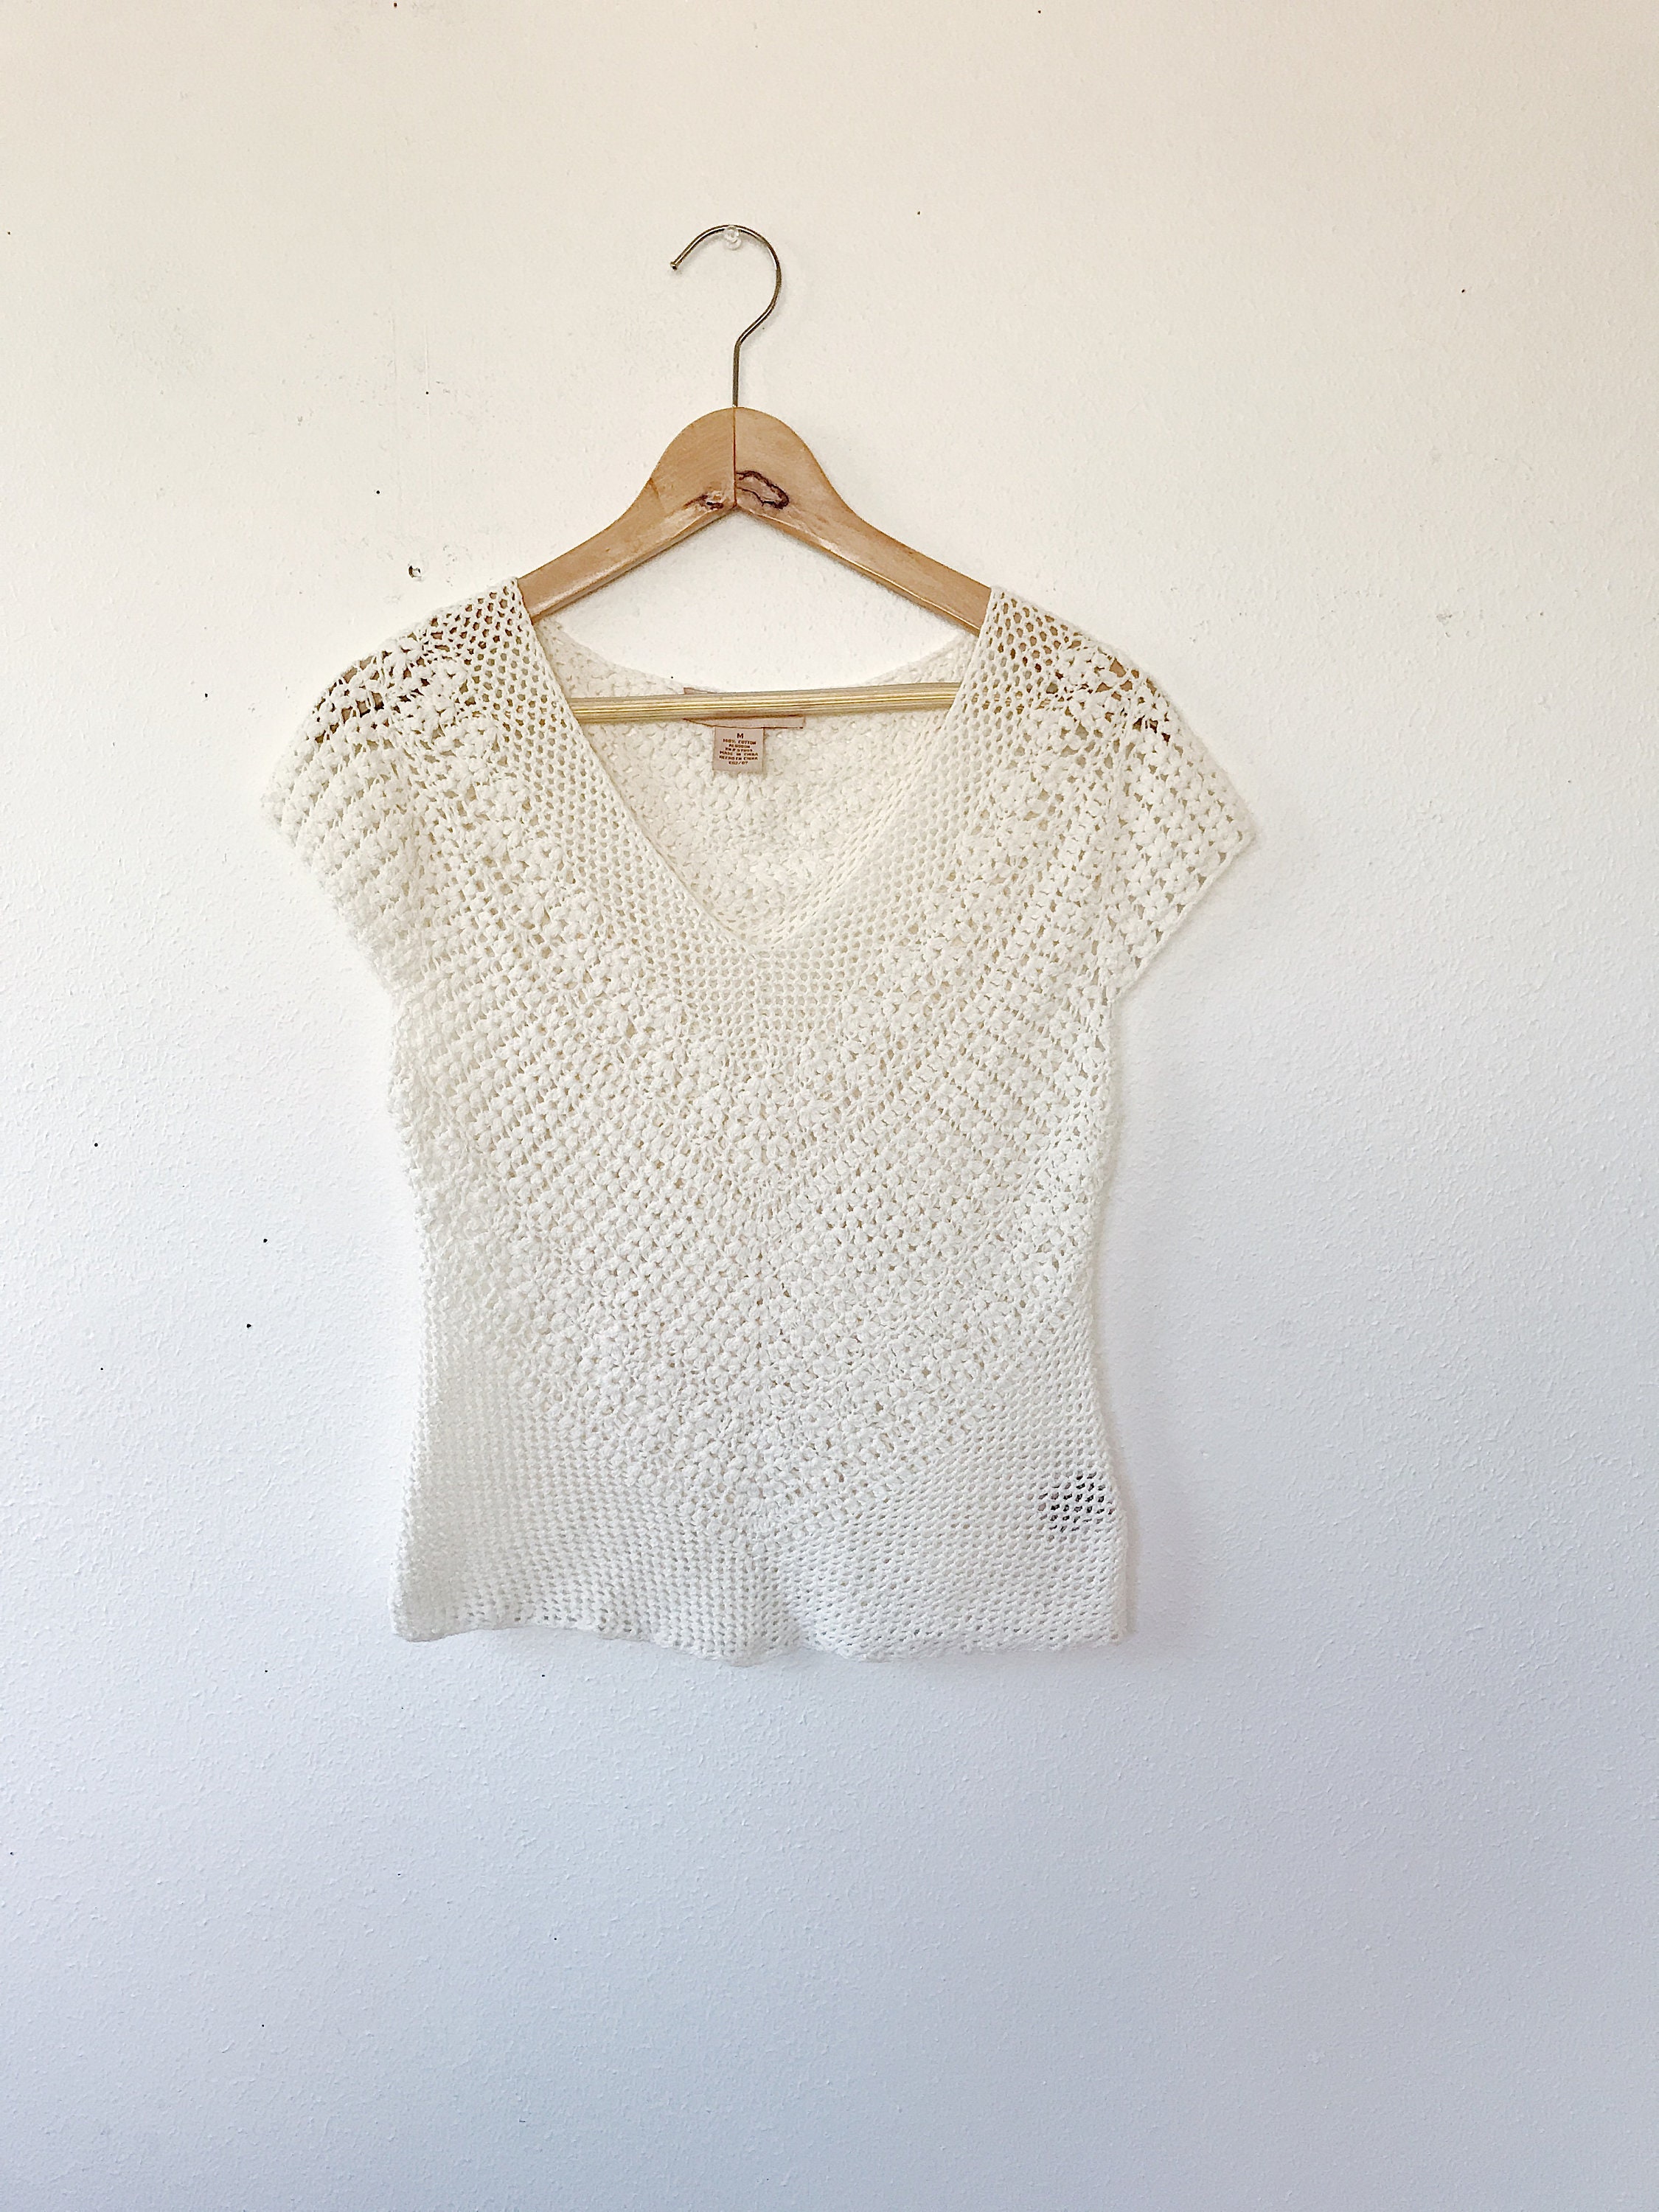 white crochet blouse / cotton crochet sweater / Crochet lace sweater